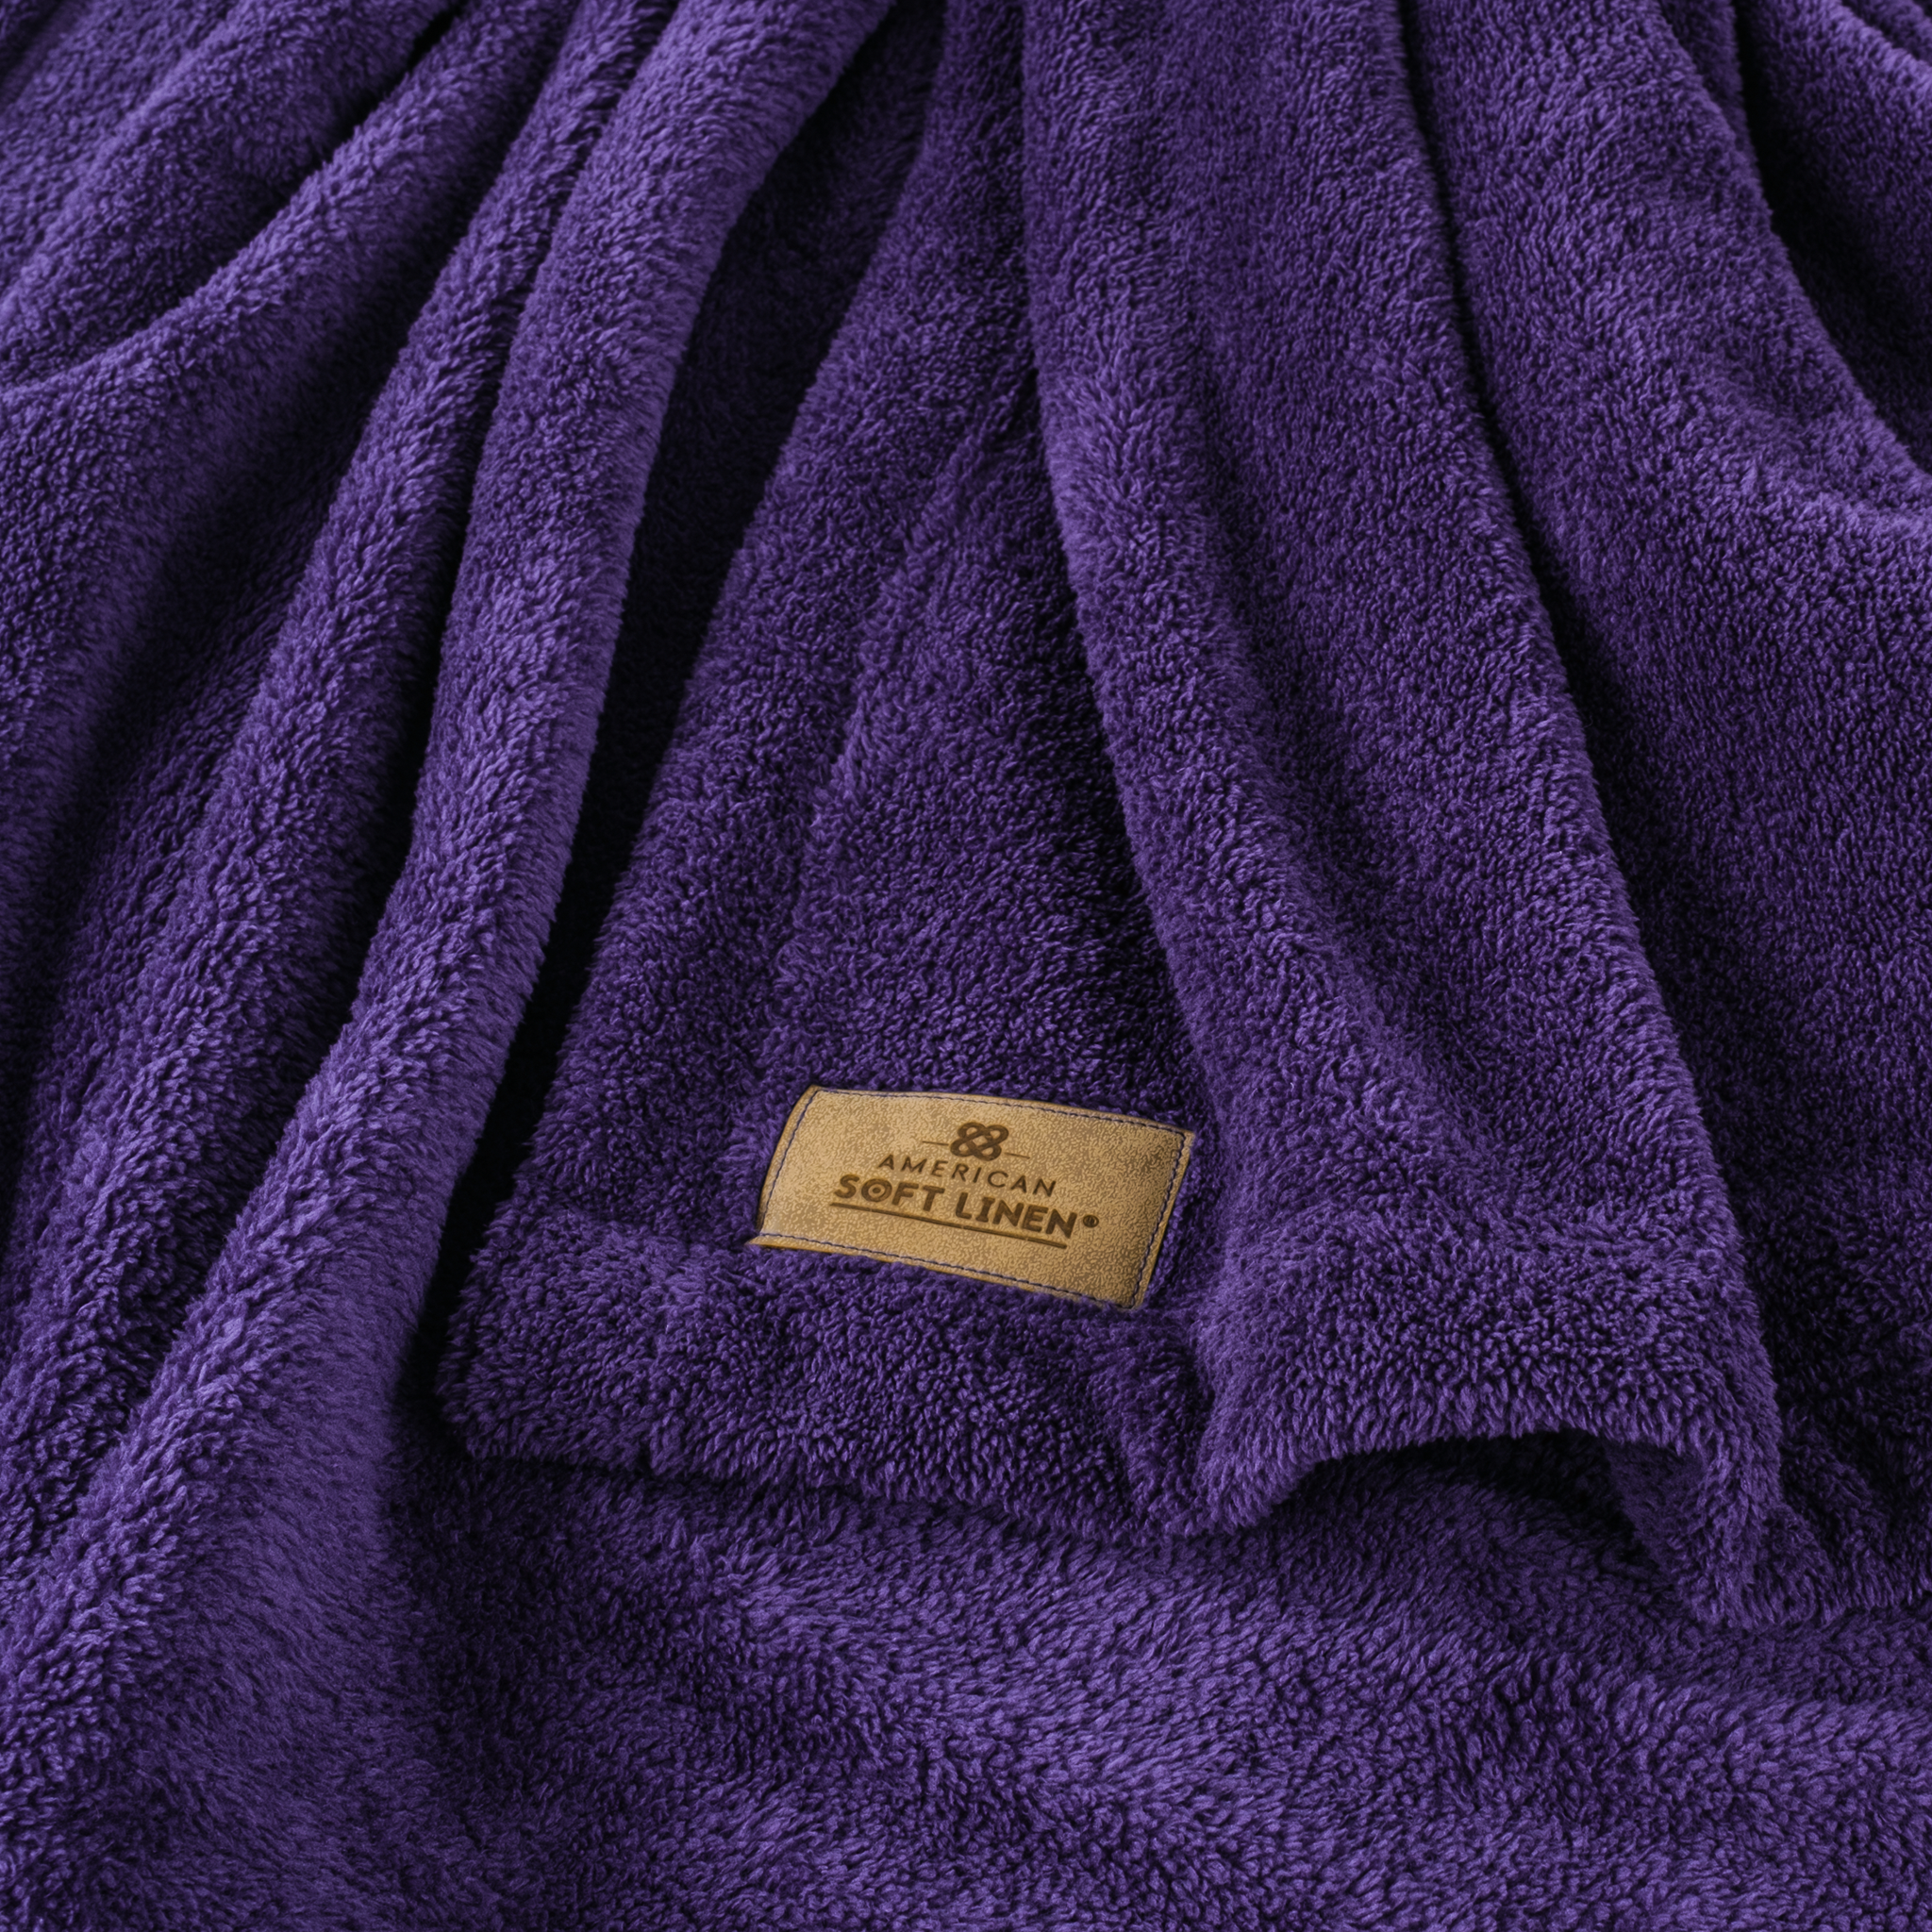 American Soft Linen - Bedding Fleece Blanket - Twin Size 60x80 inches - Purple - 4